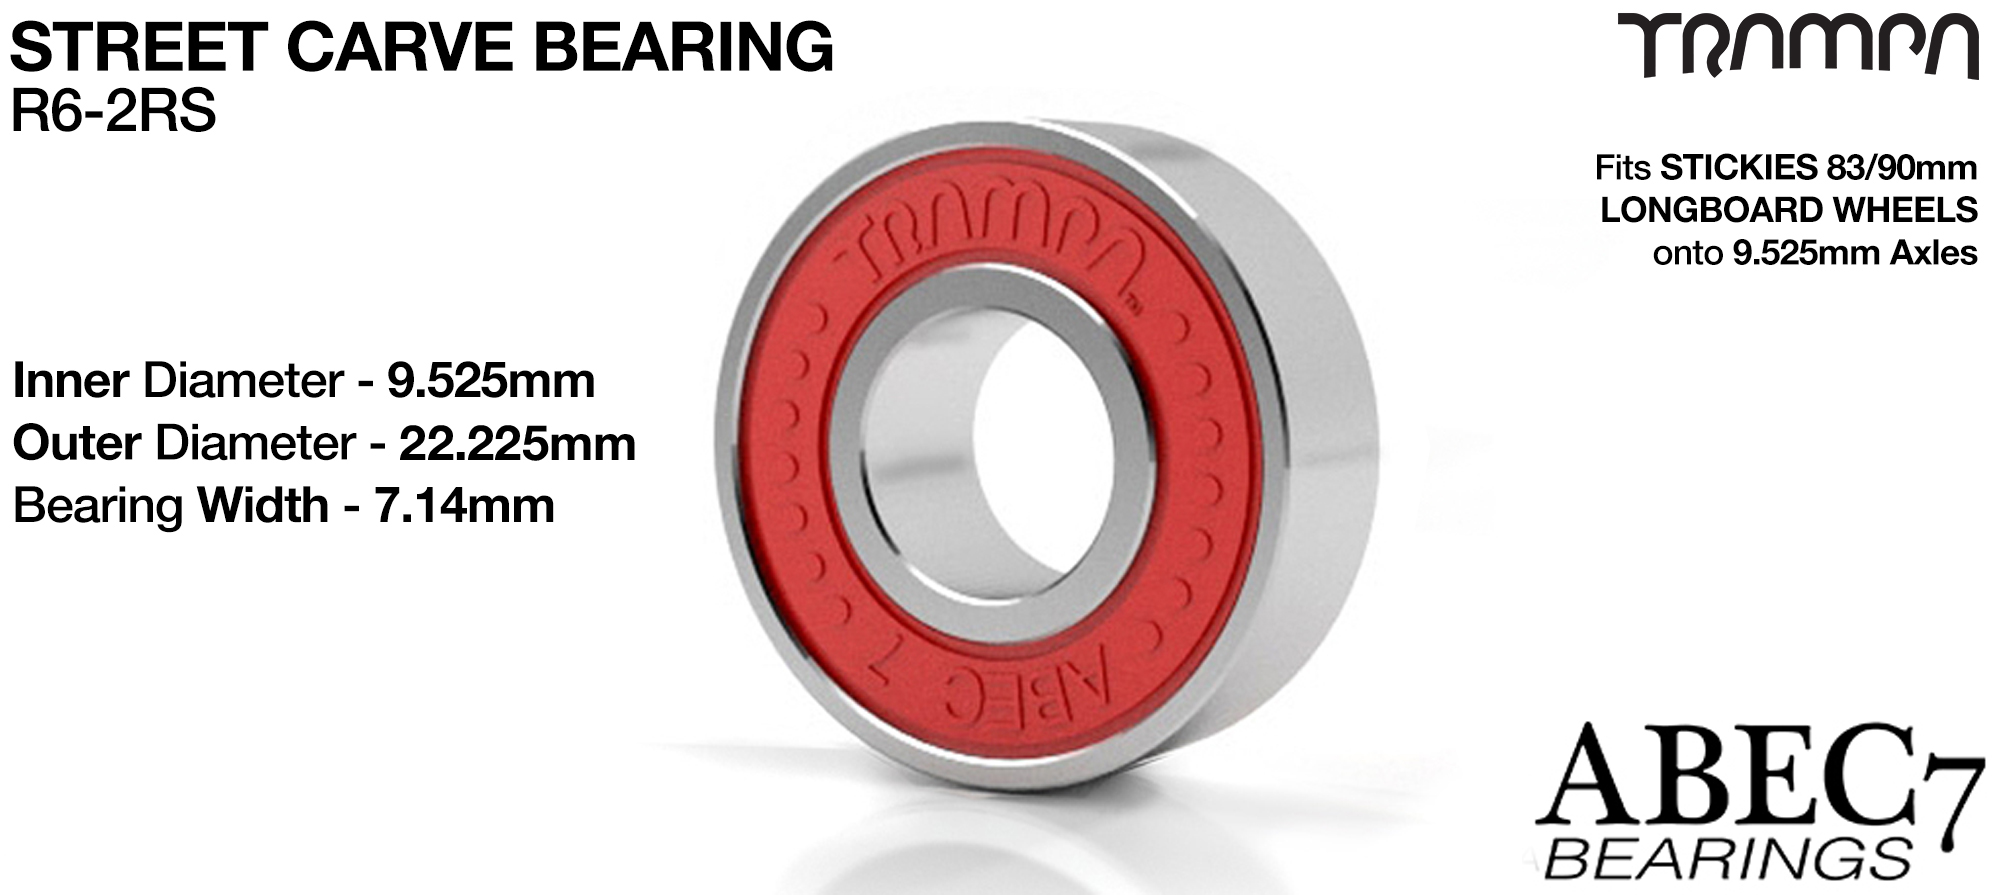 RED R6-2RS 9.525mm Bearings (+£5)